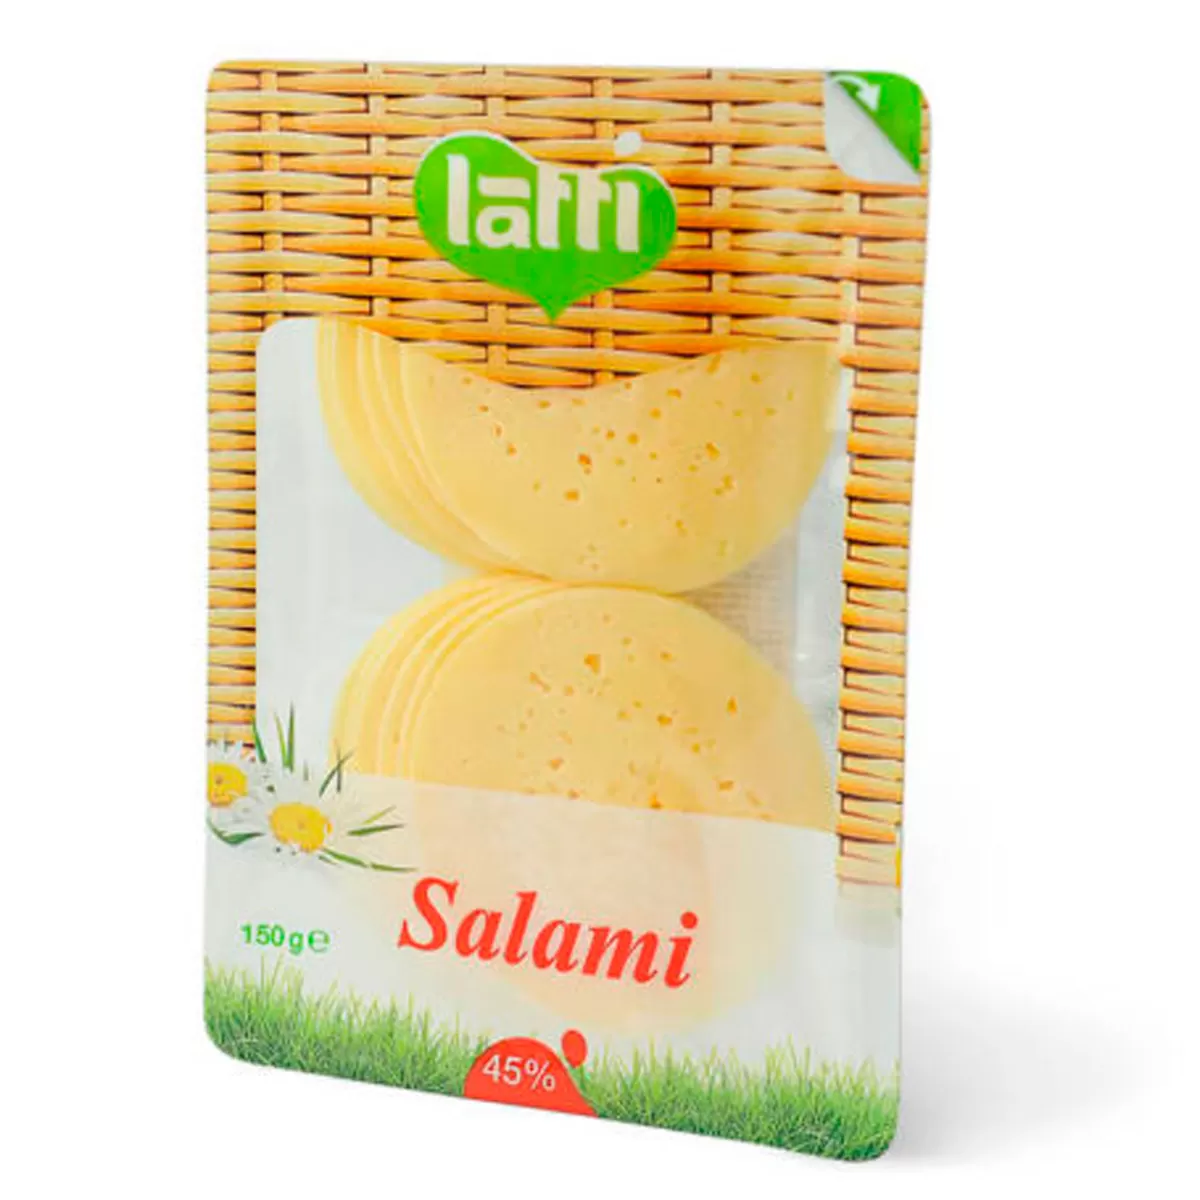 LATTI Нарезанный сыр Салями 150г